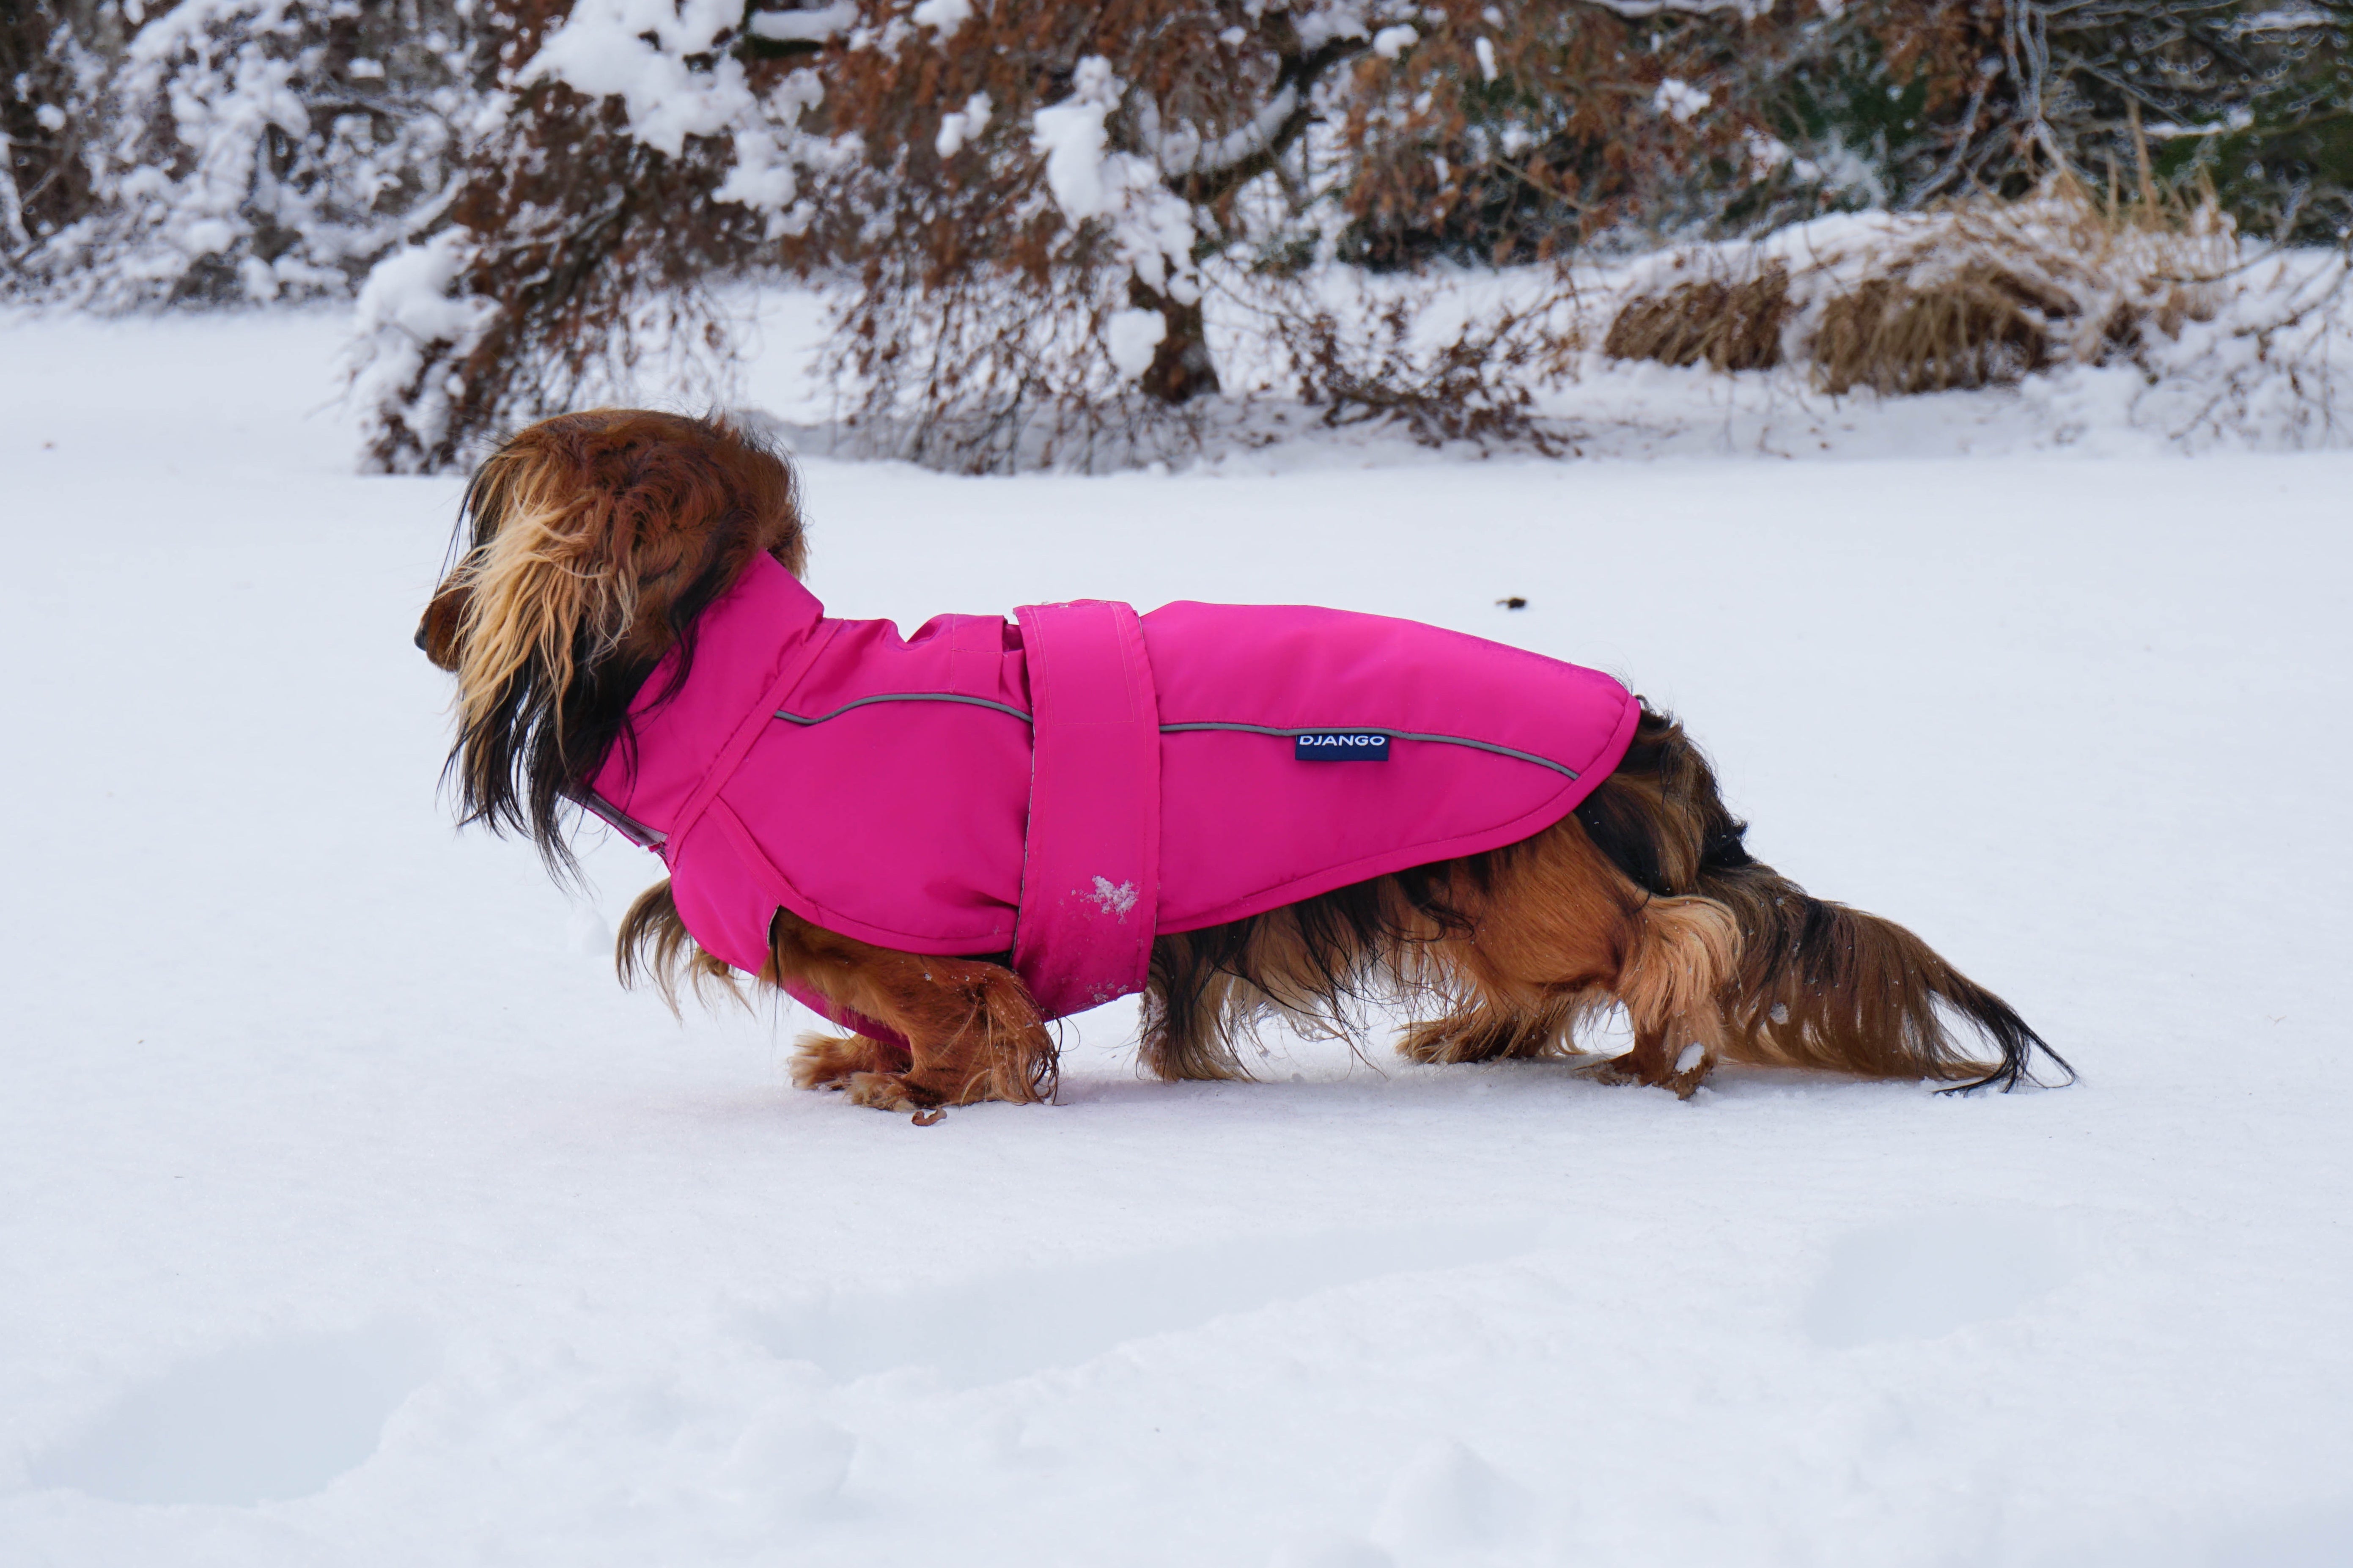 DJANGO - How cold do dogs get in the winter? - djangobrand.com